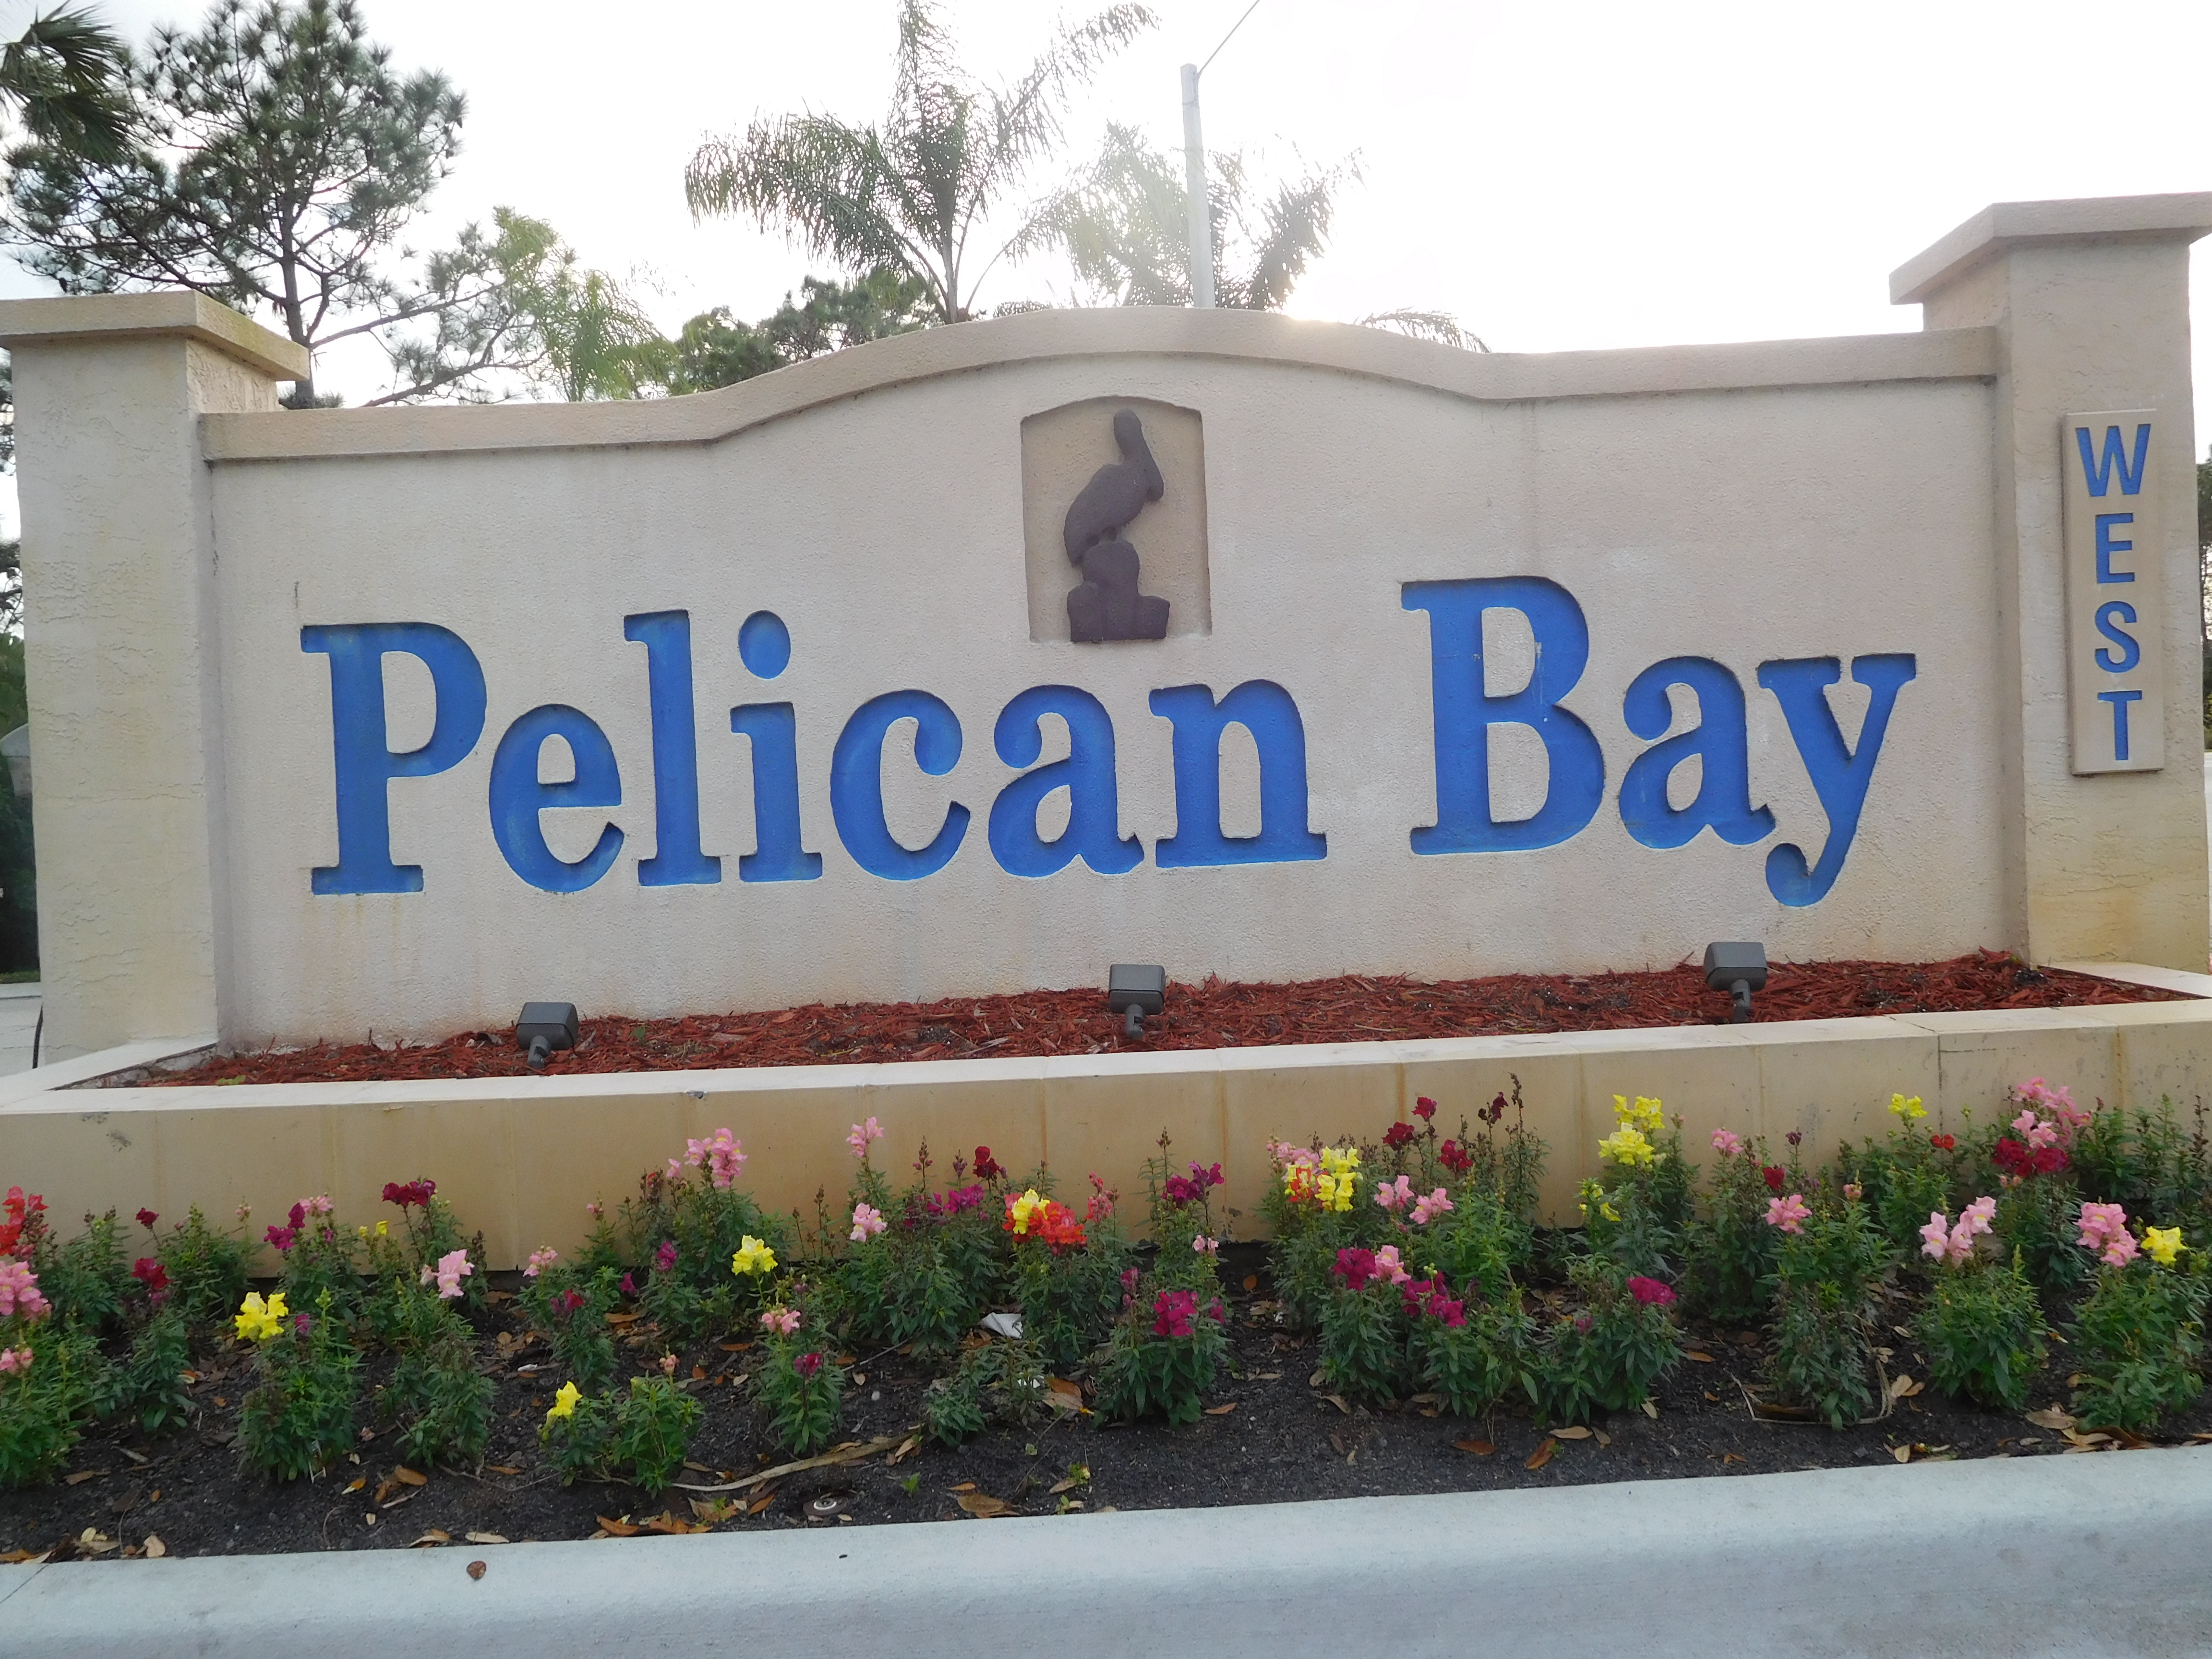 Pelican Bay-Daytona | weluvgolf.com4608 x 3456